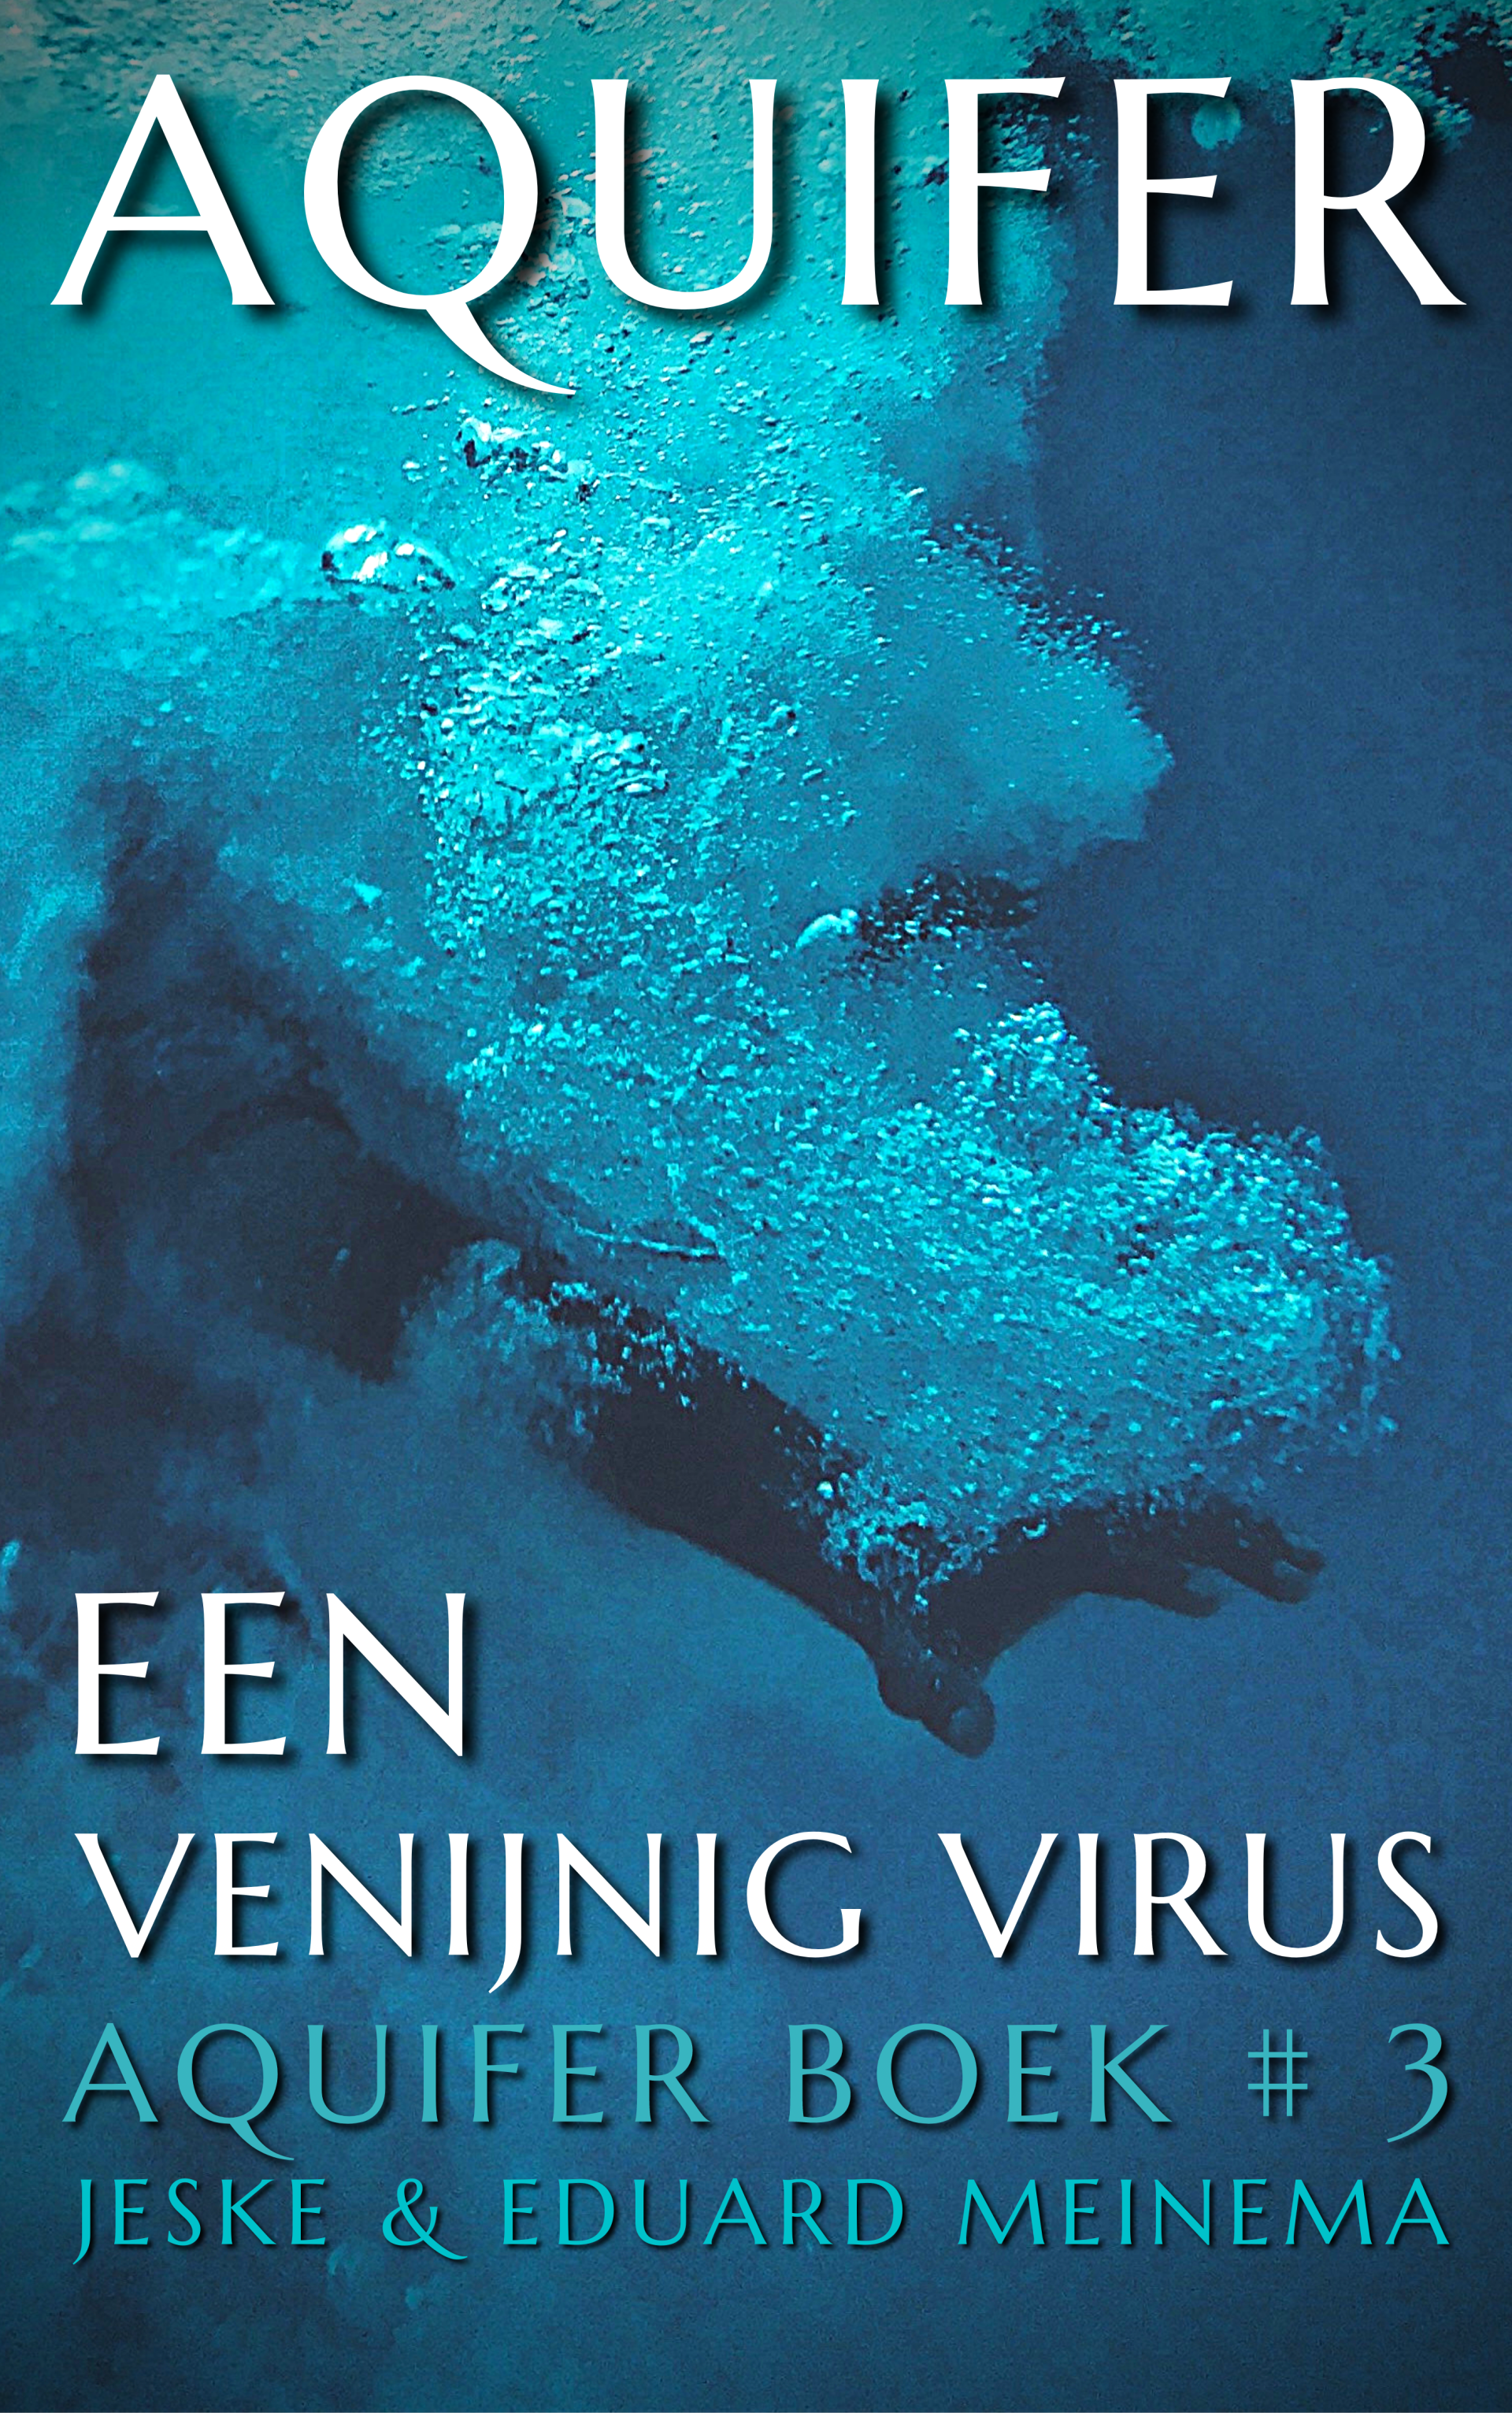 Aquifer, book # 3, Venomous Virus, Jeske & Eduard Meinema